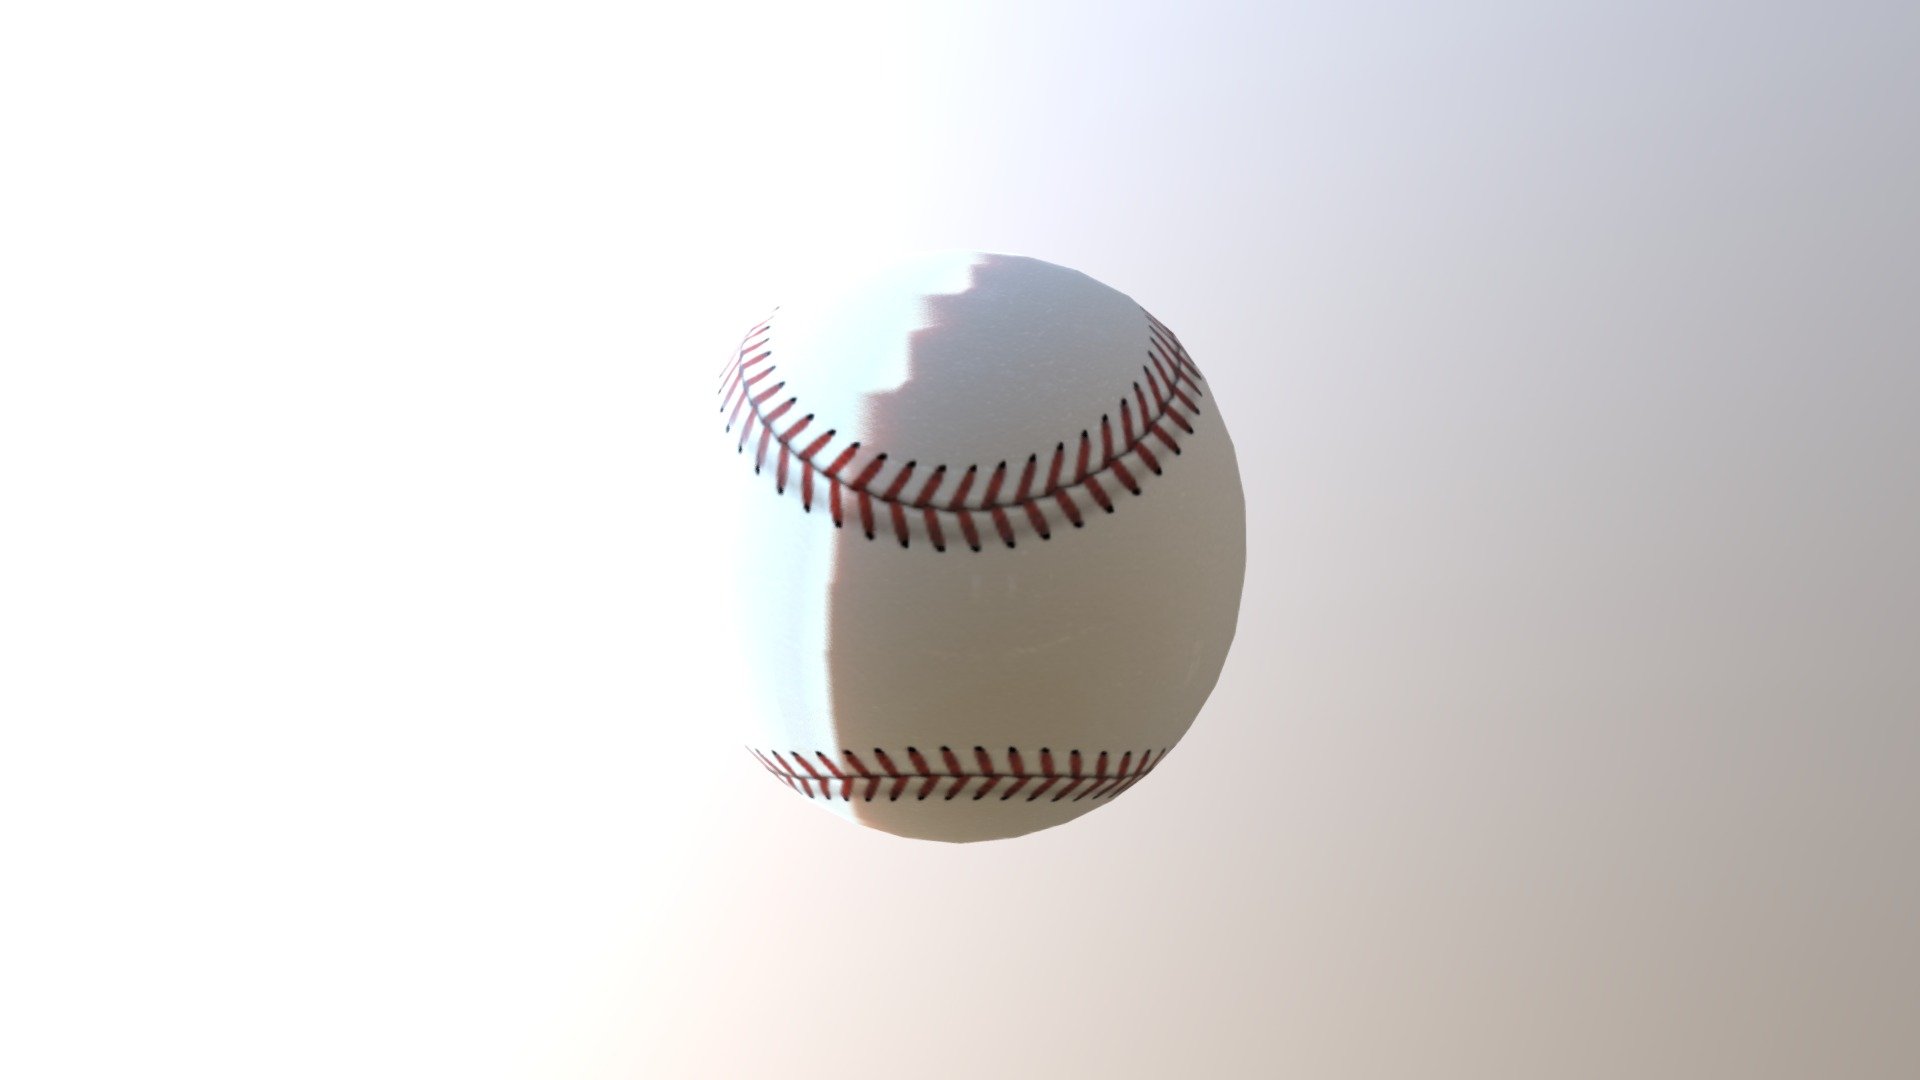 This is my Baseball in progress 3d model